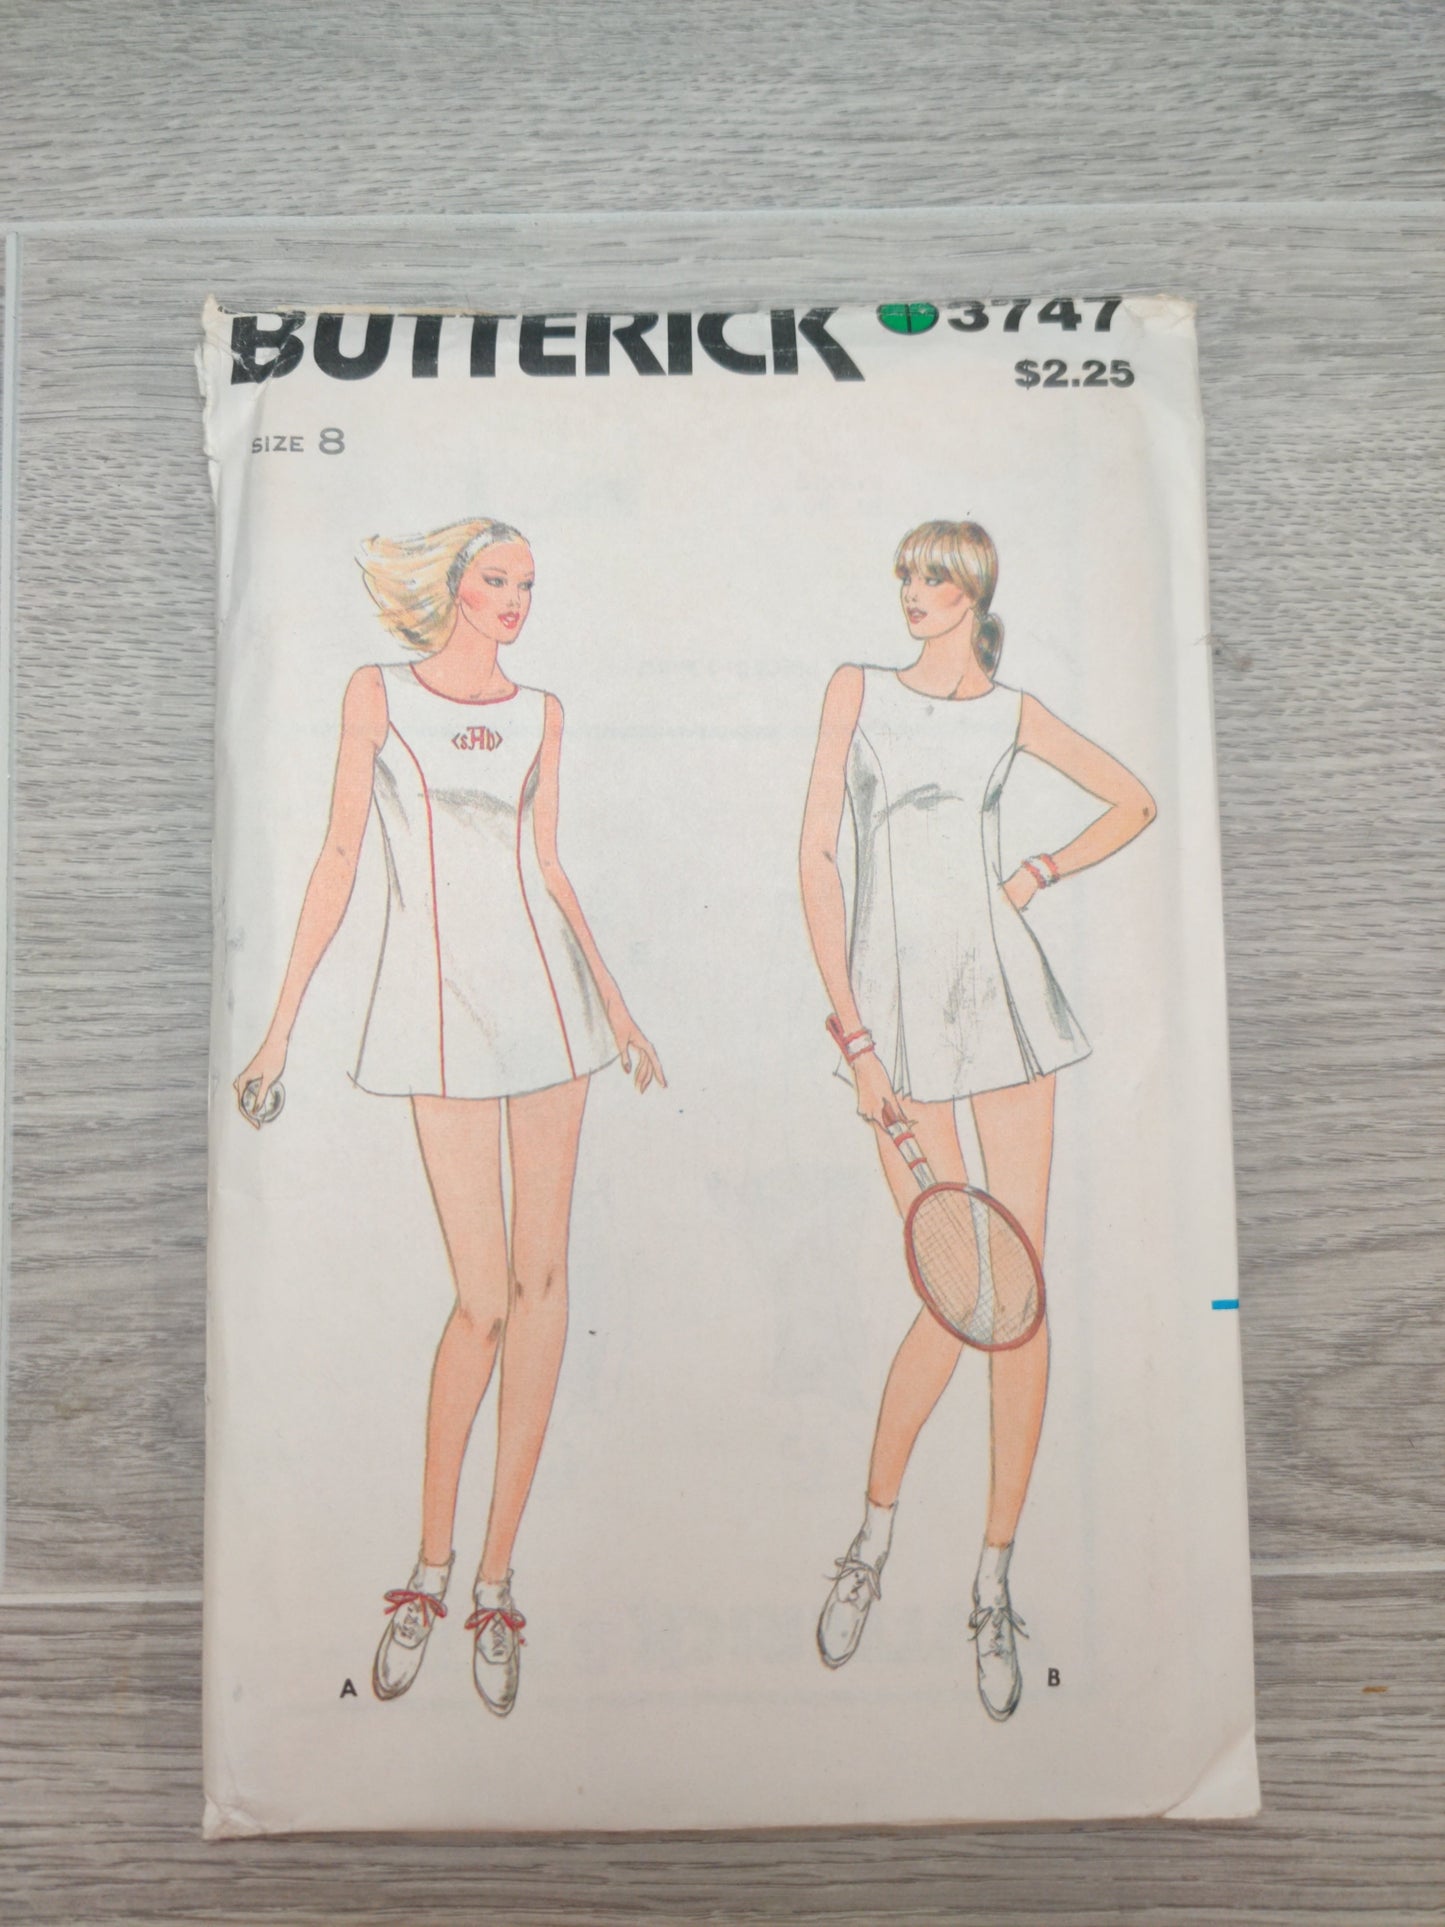 Butterick 3747 Size 10